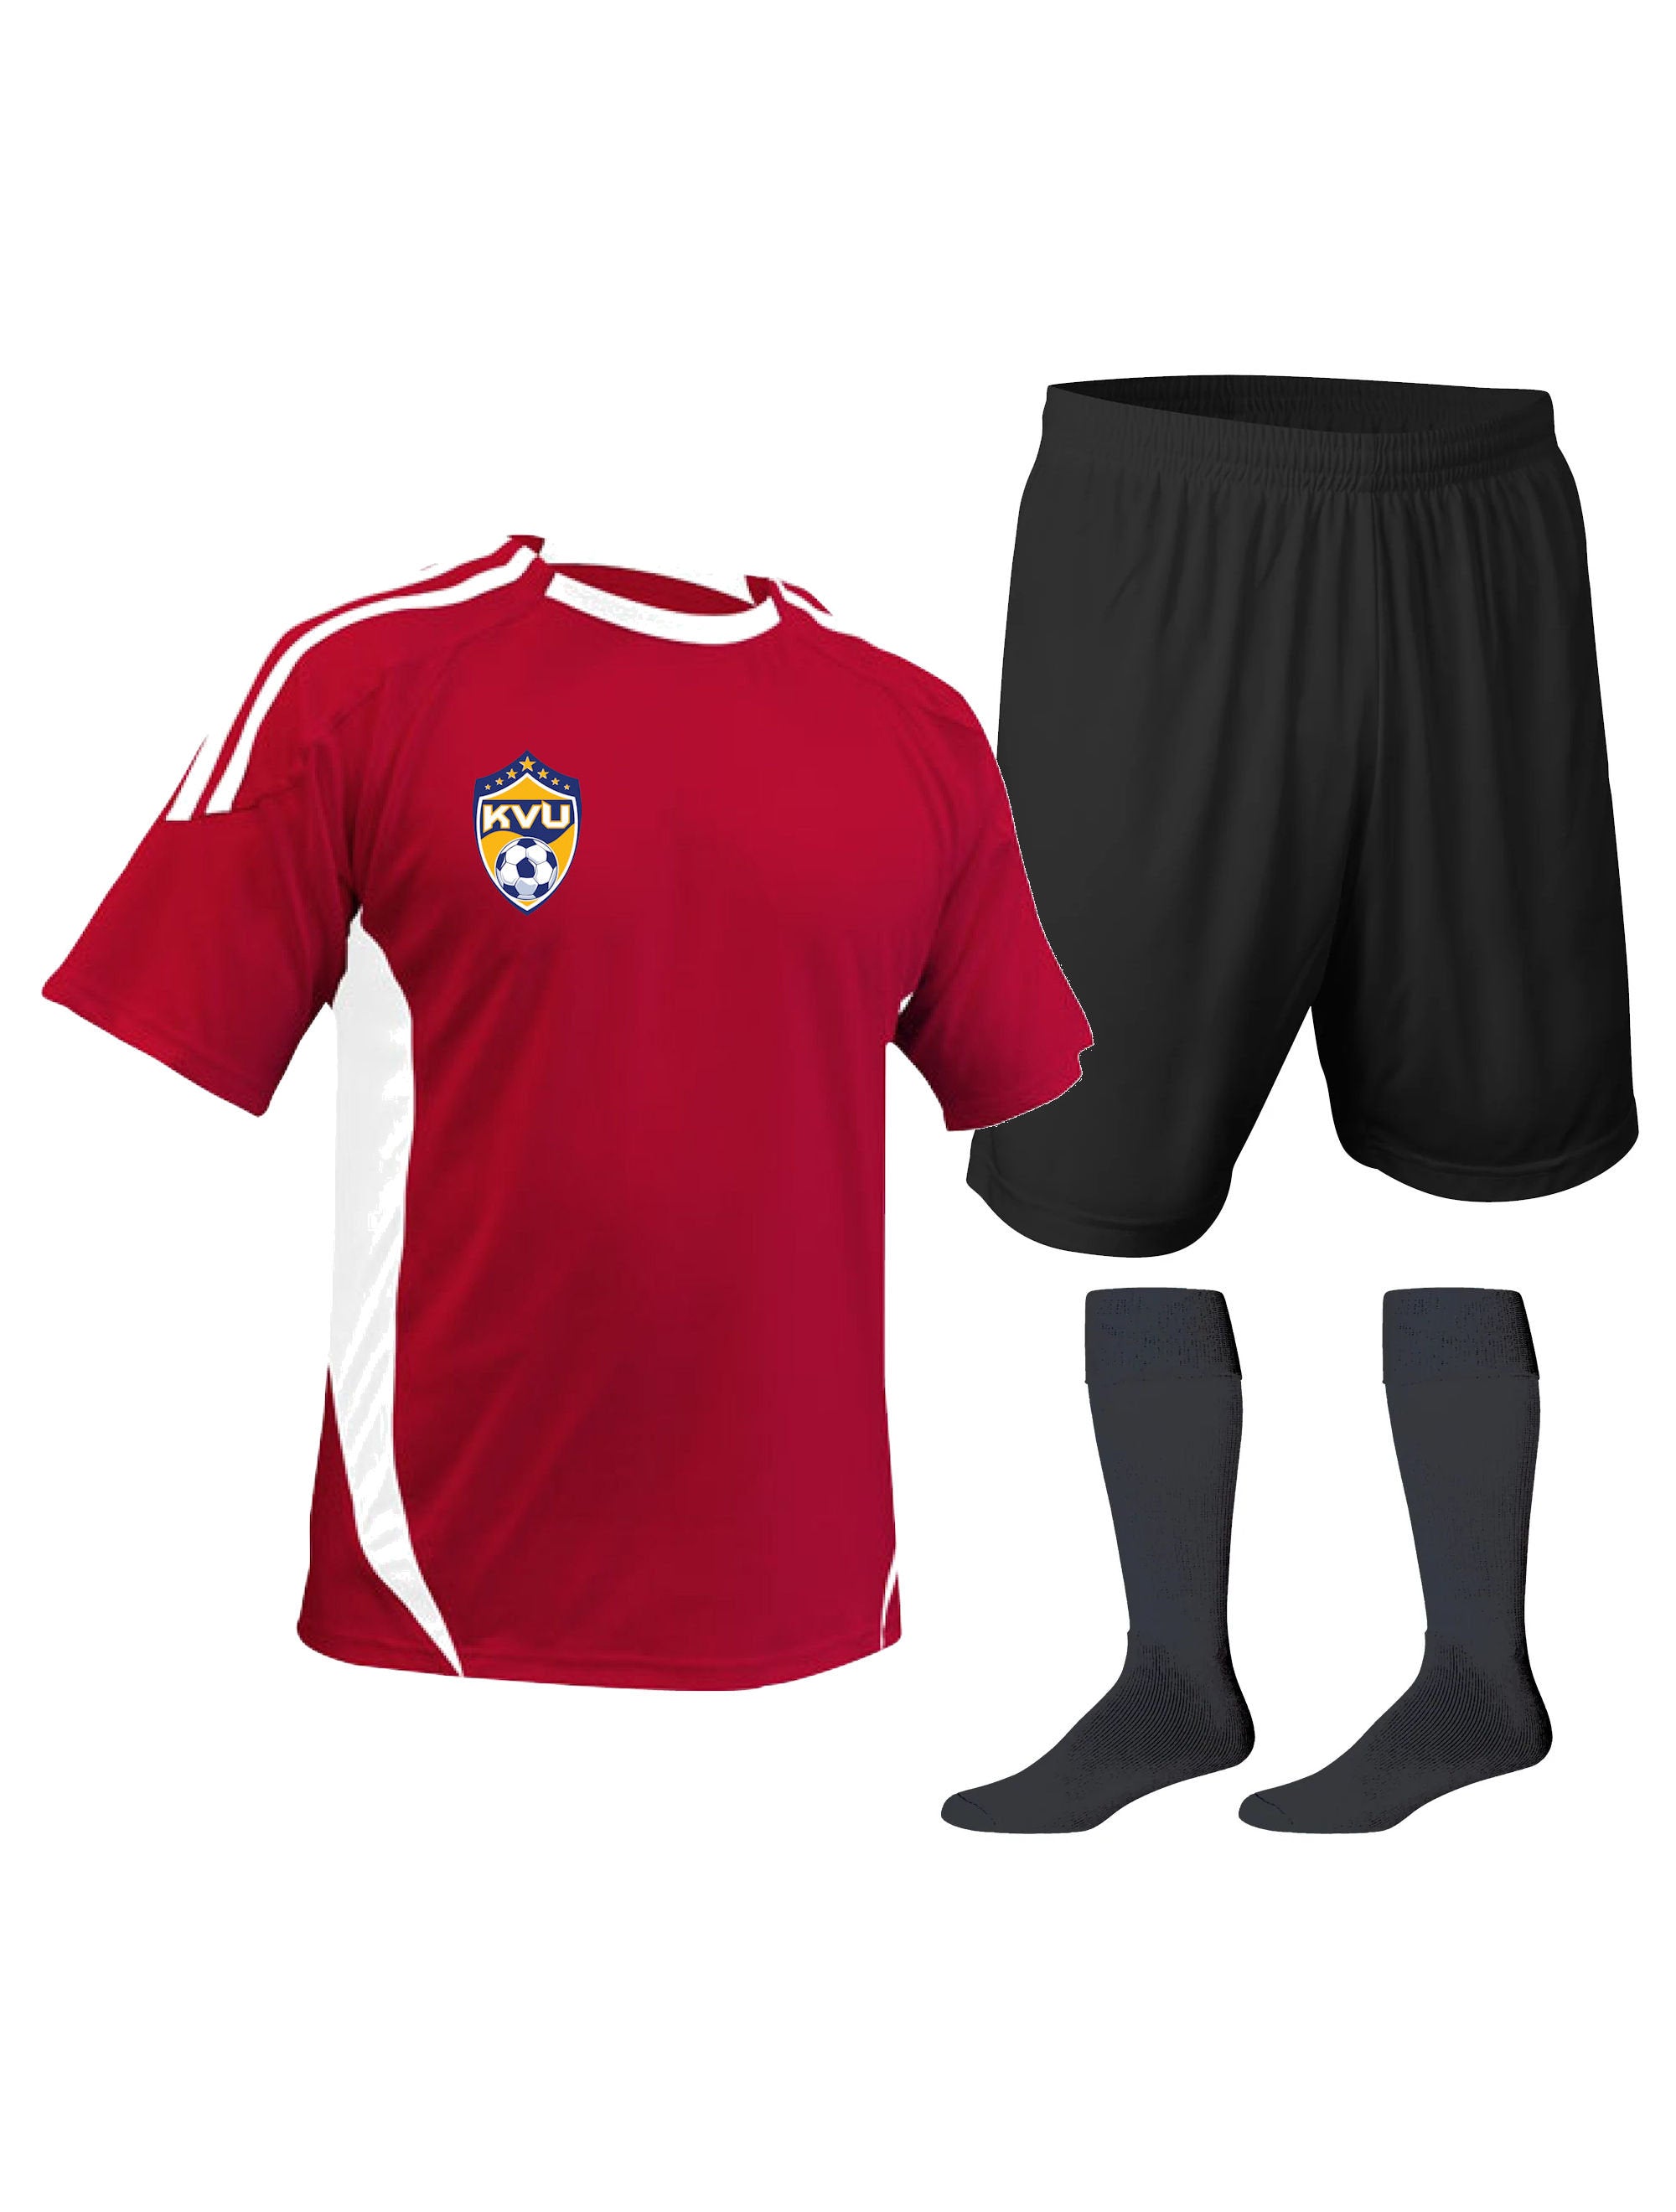 KVU Soccer Club Uniform Package – Quantum Sports